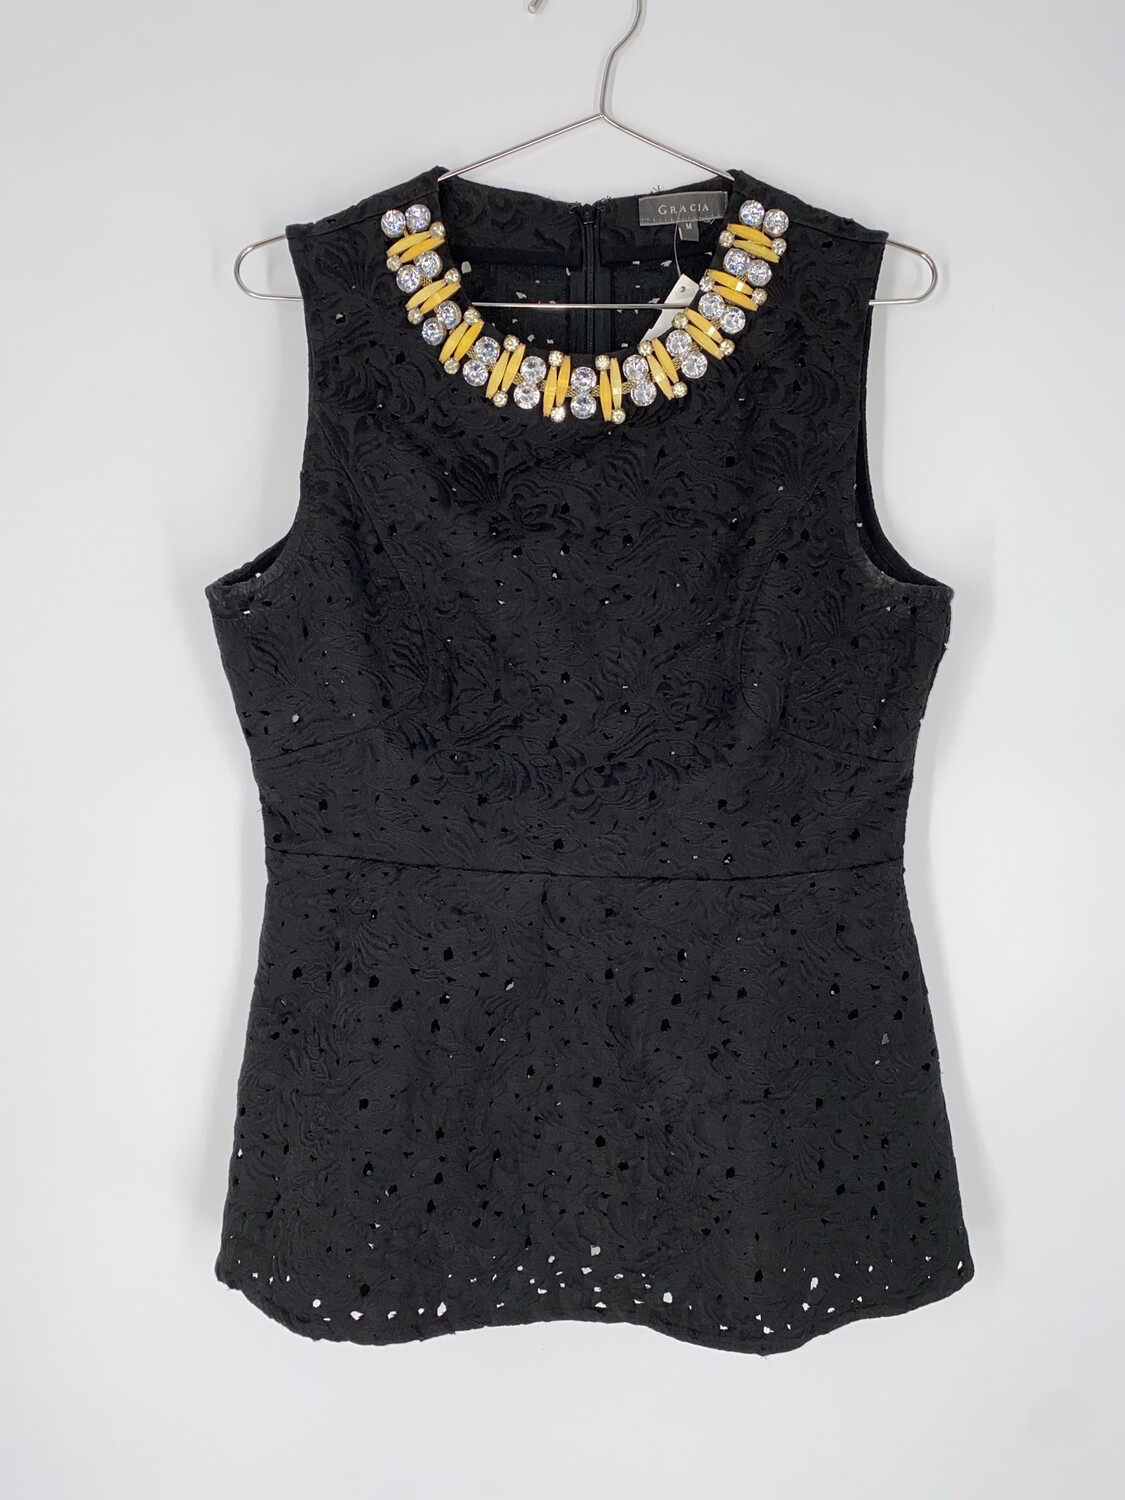 Gracia Black Lace Peplum Top With Beaded Neckline Size M